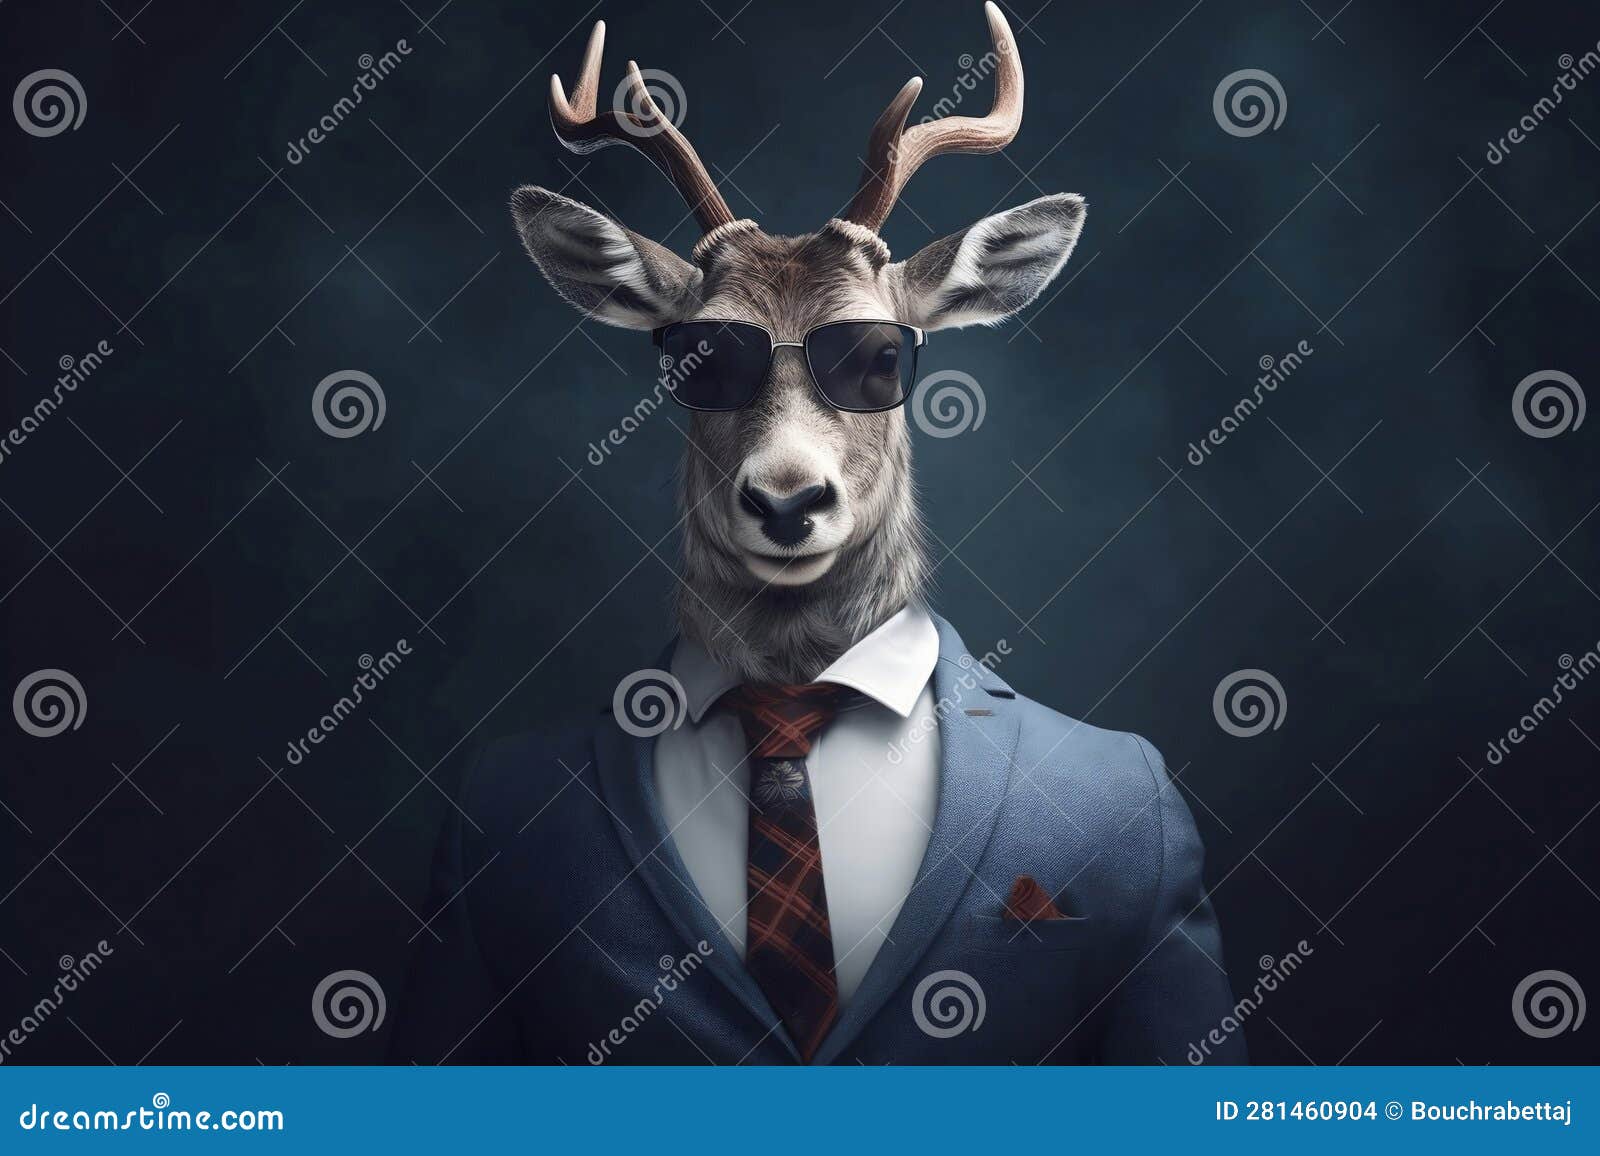 Portrait of a Deer Dressed in a Formal Business Suit Stock Illustration ...